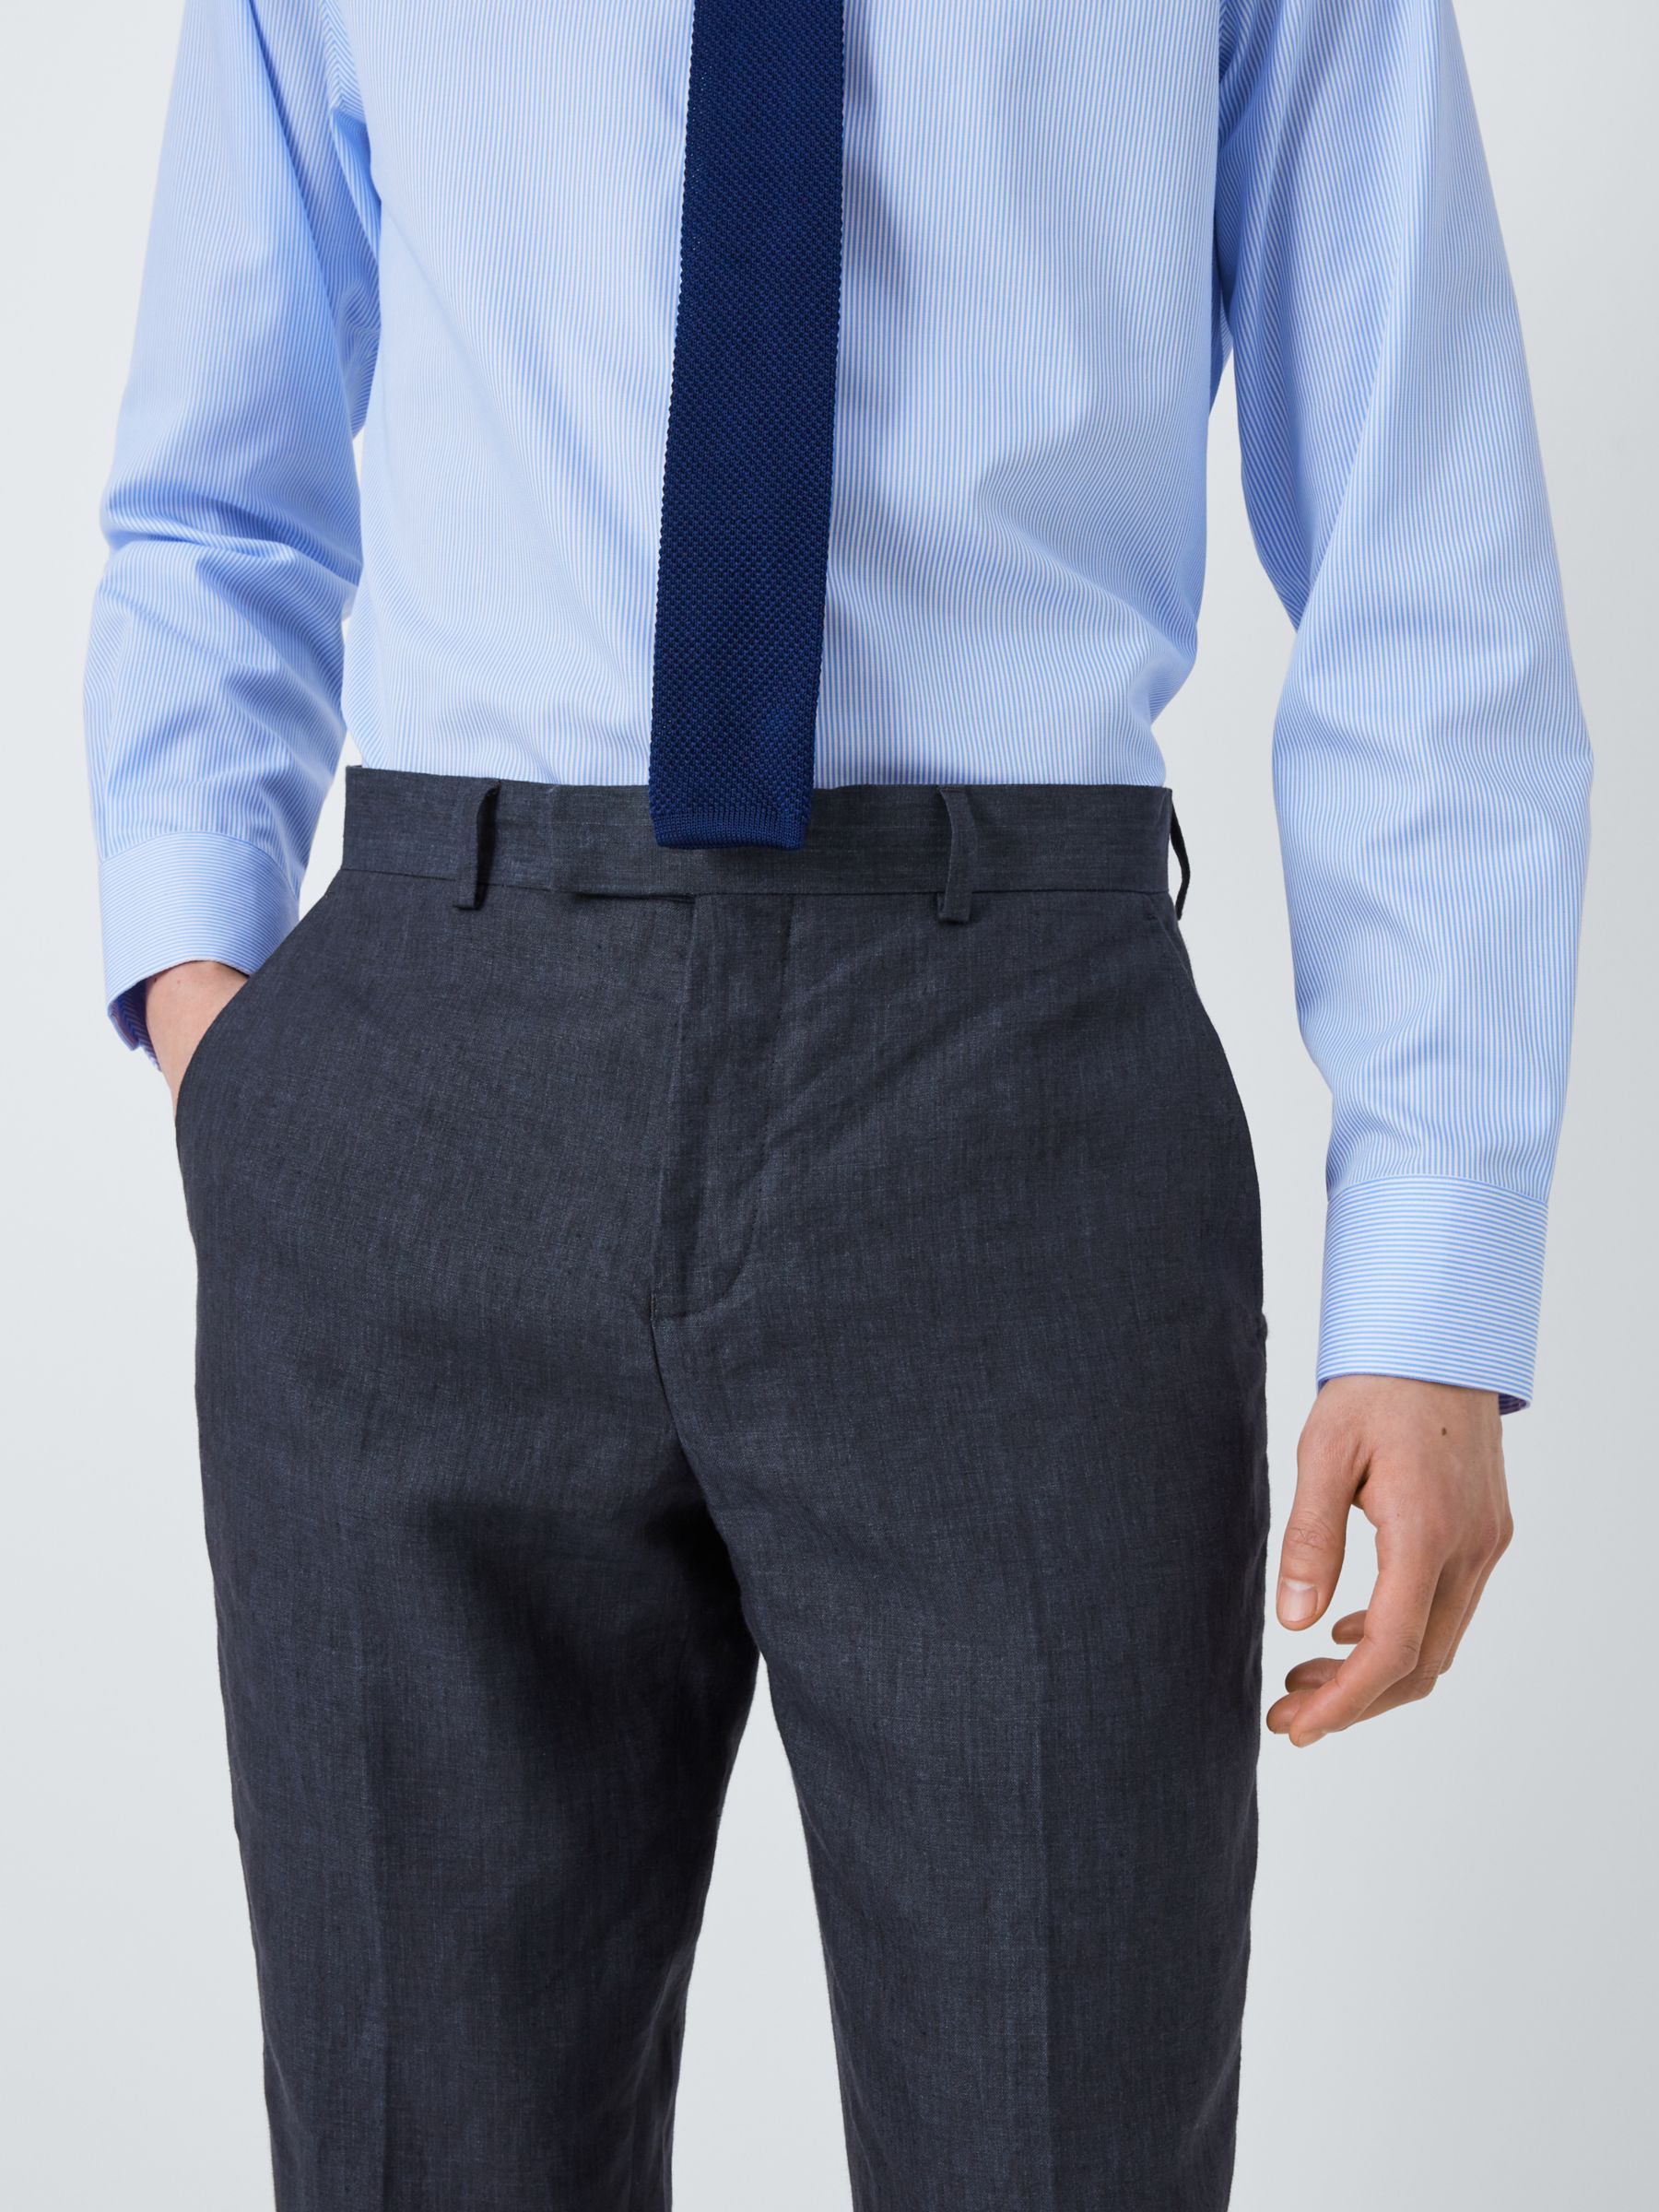 John Lewis Cambridge Linen Regular Fit Trousers, Navy, 34S